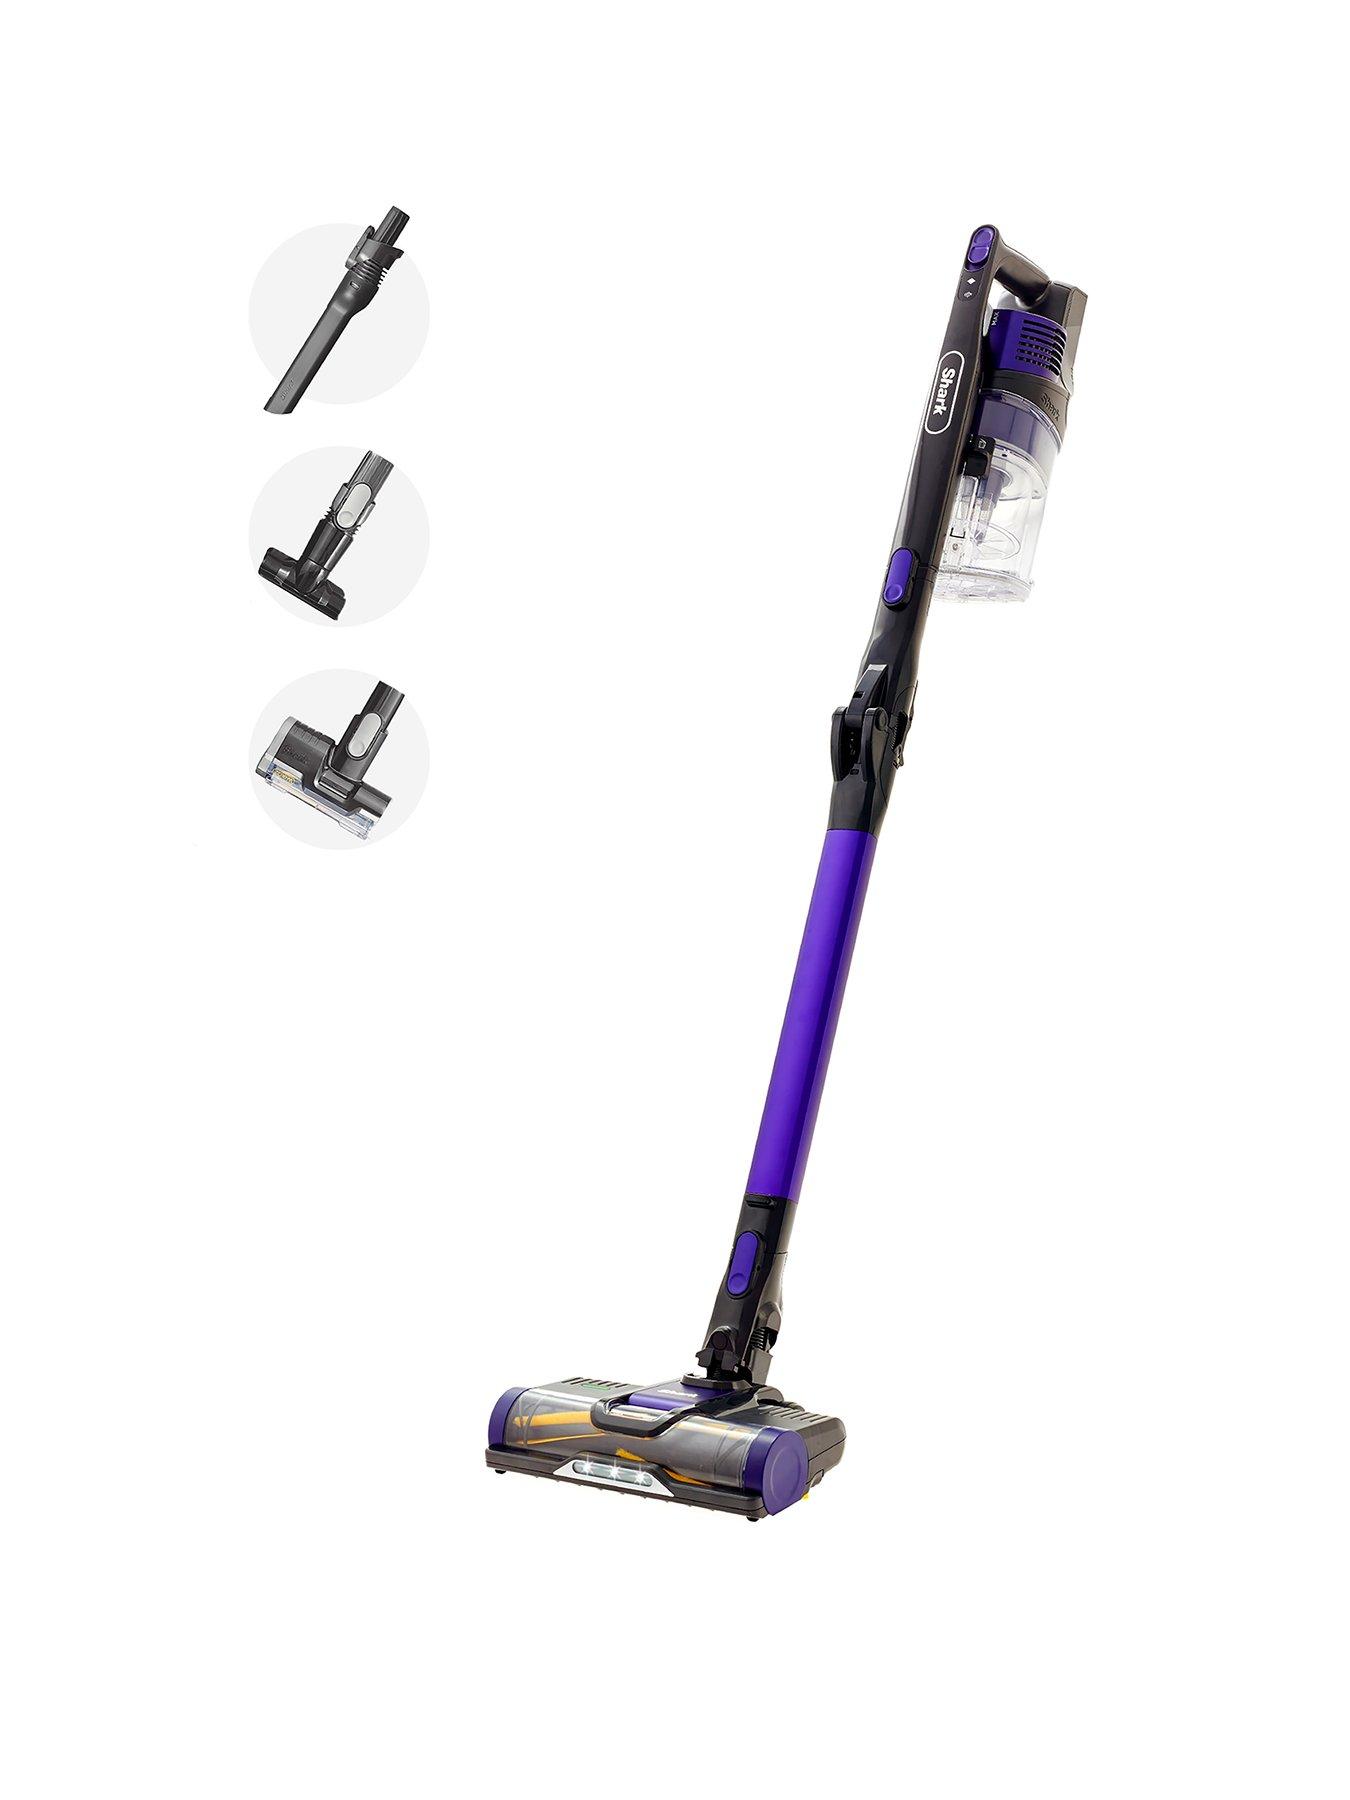 Samsung VS15A6031R4 Jet 60 Turbo Cordless vacuum cleaner - purple